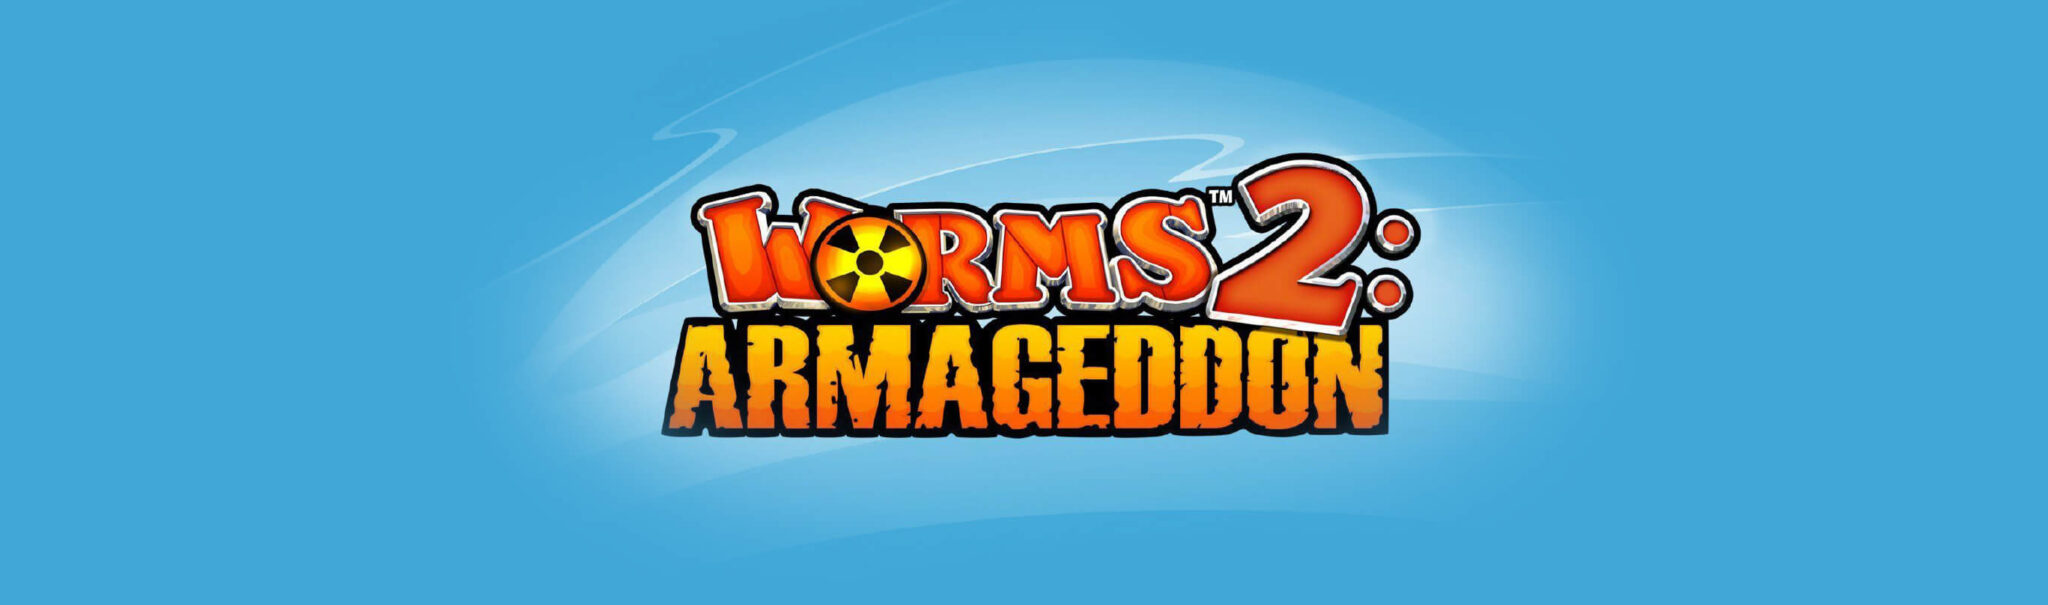 worms 2 armageddon download